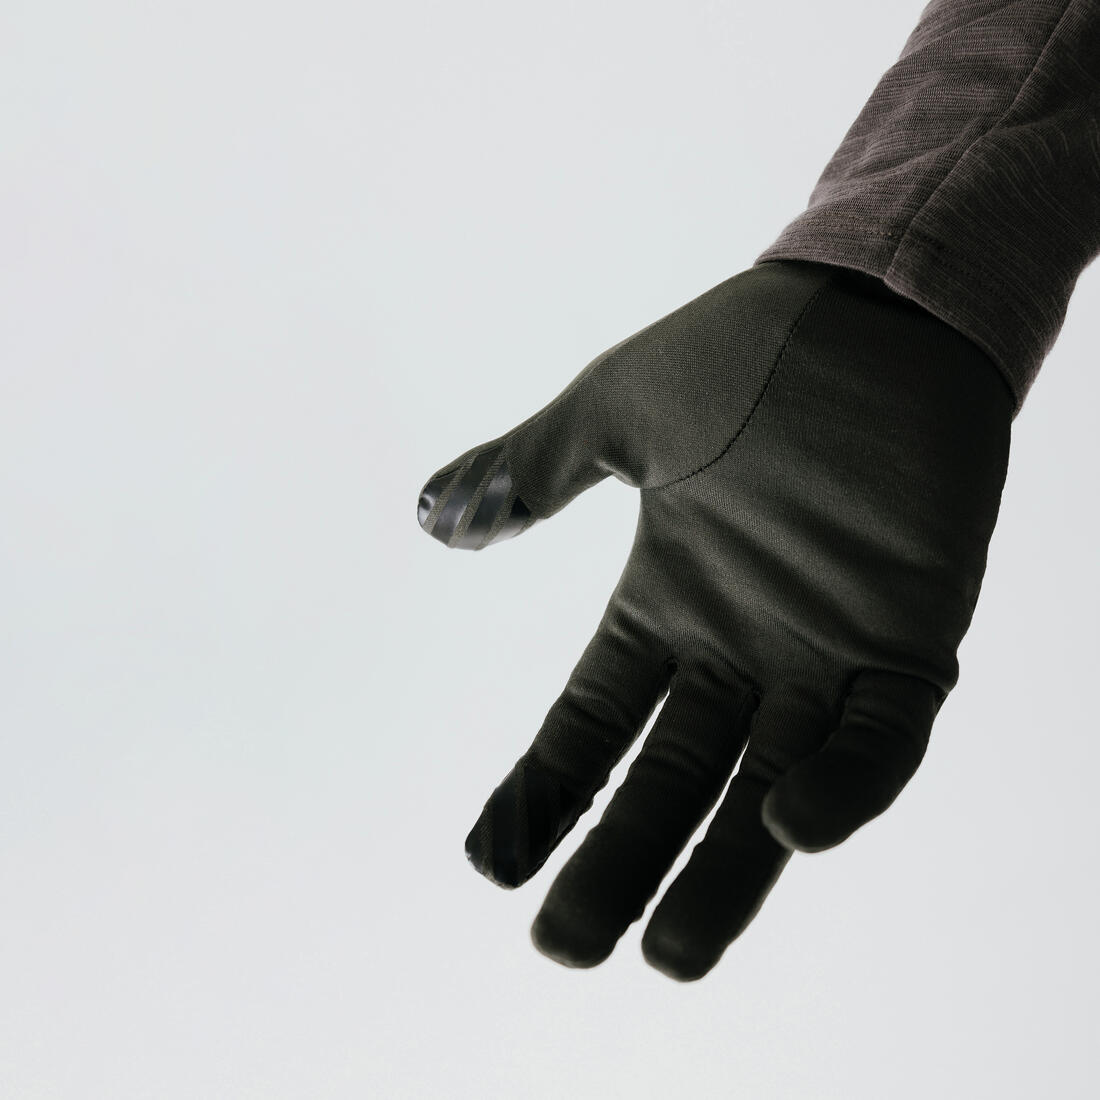 KALENJI(カレンジ) ランニンググローブ 手袋 タッチパネル対応